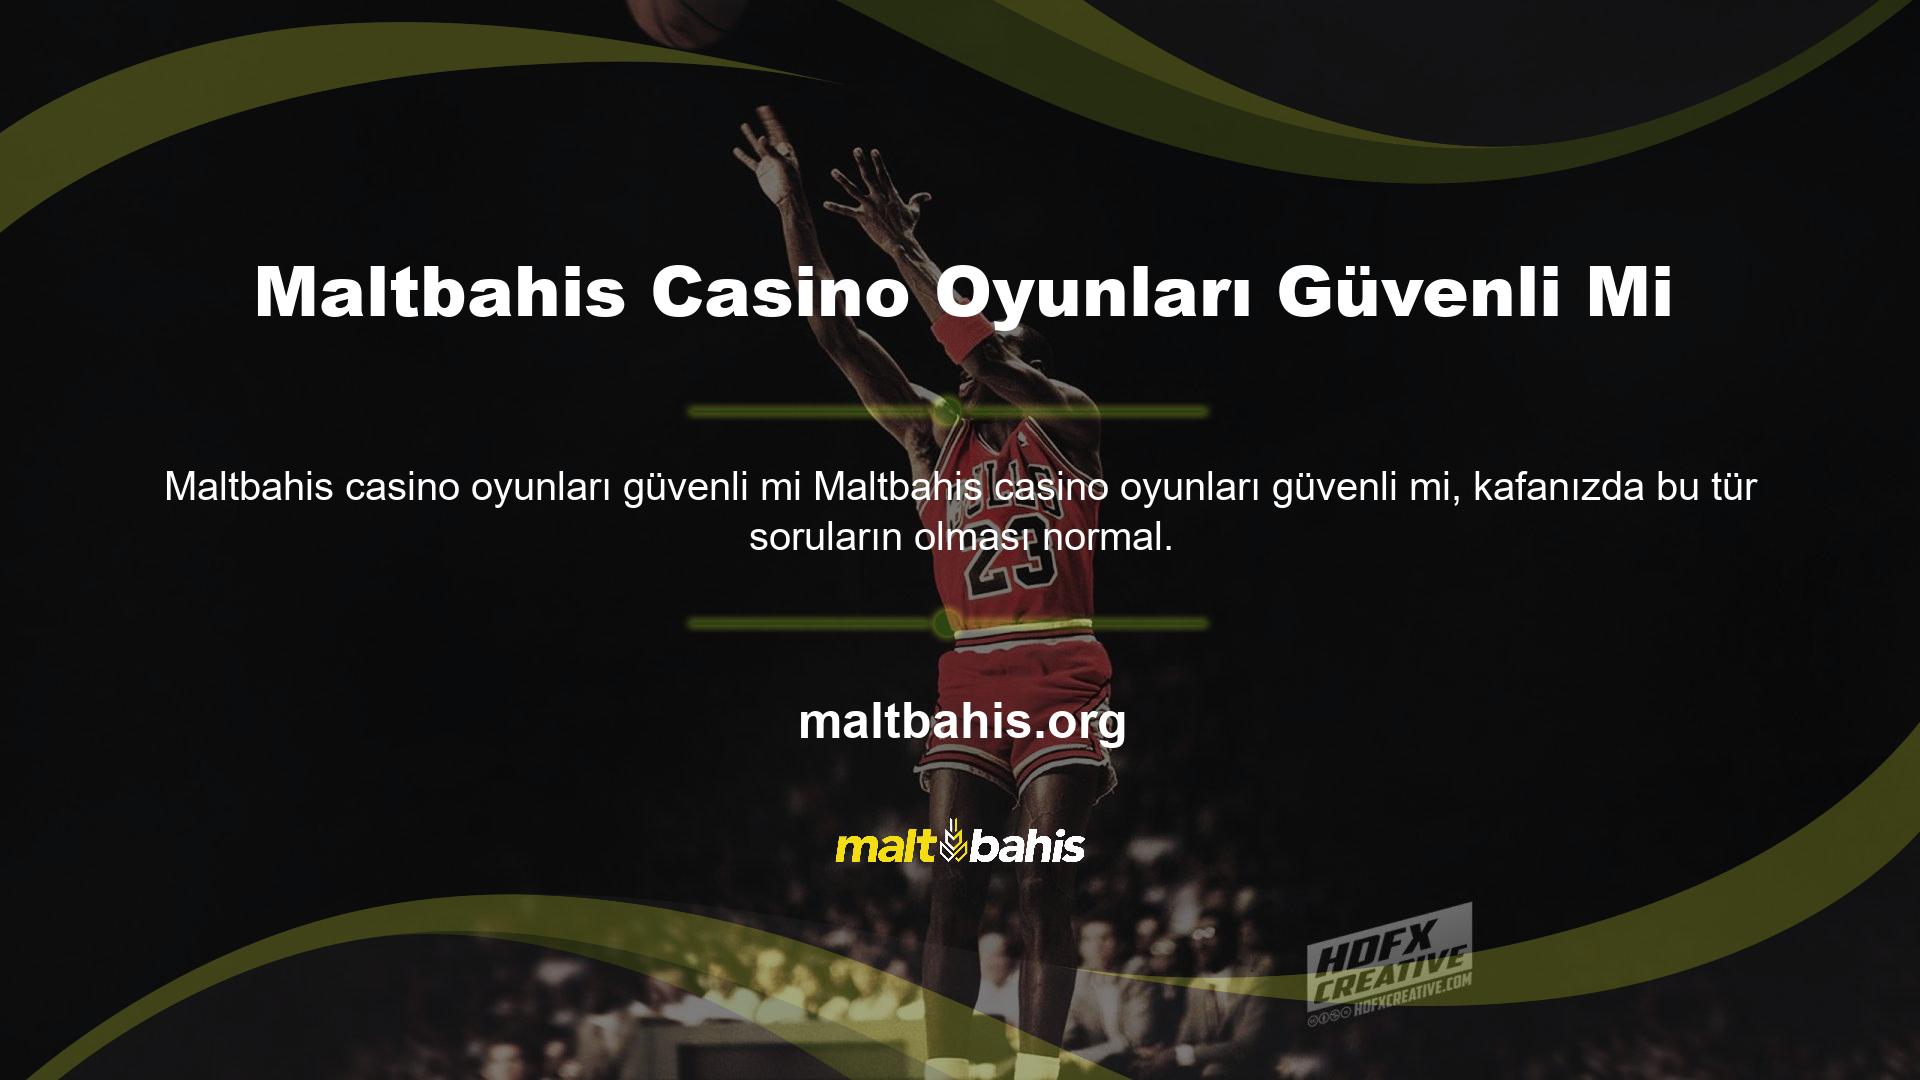 Maltbahis casino oyunları güvenli mi